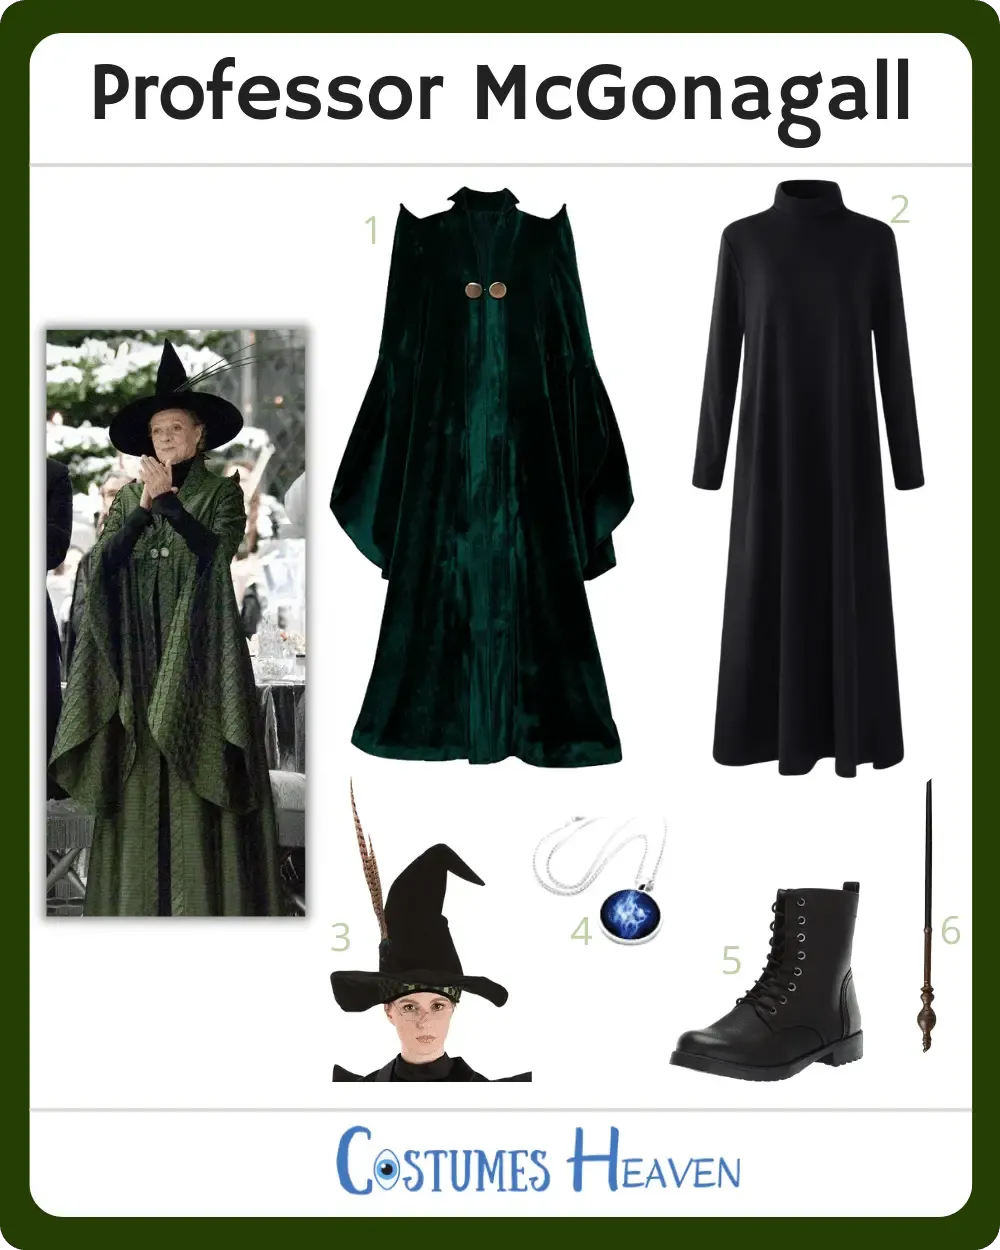 Professor McGonagall costume